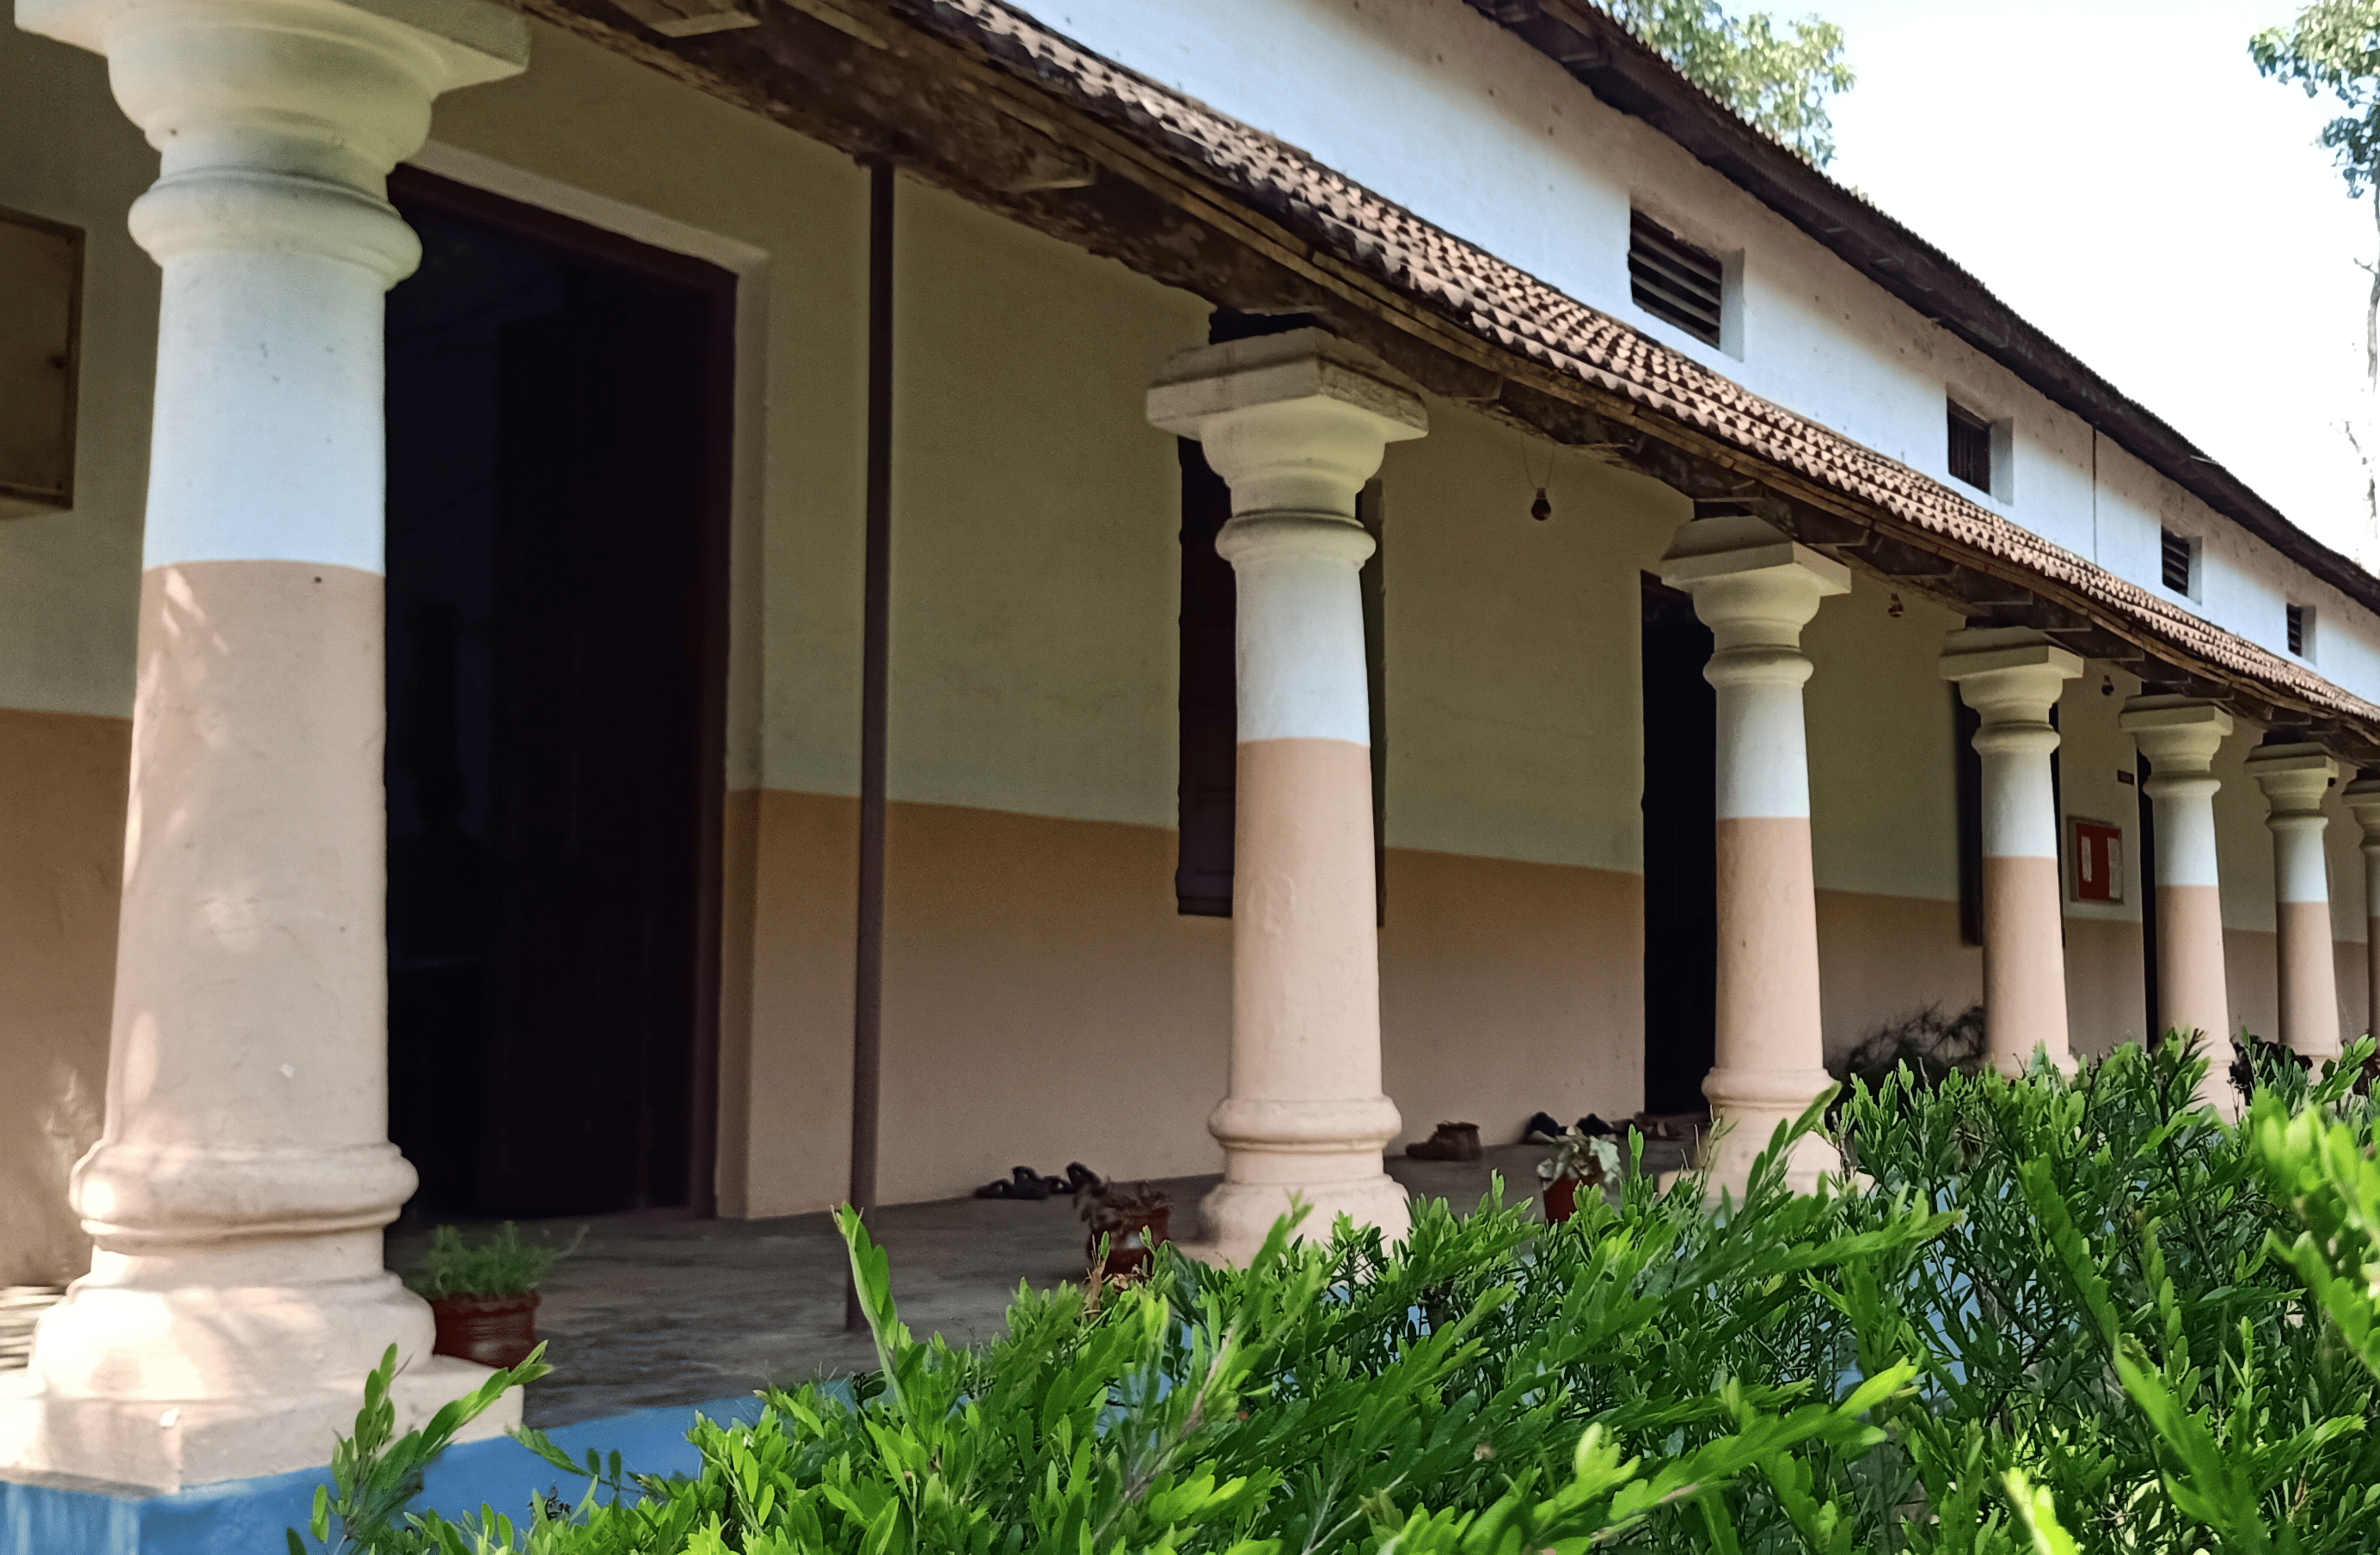 CNI Teachers Training Institute, Kottayam